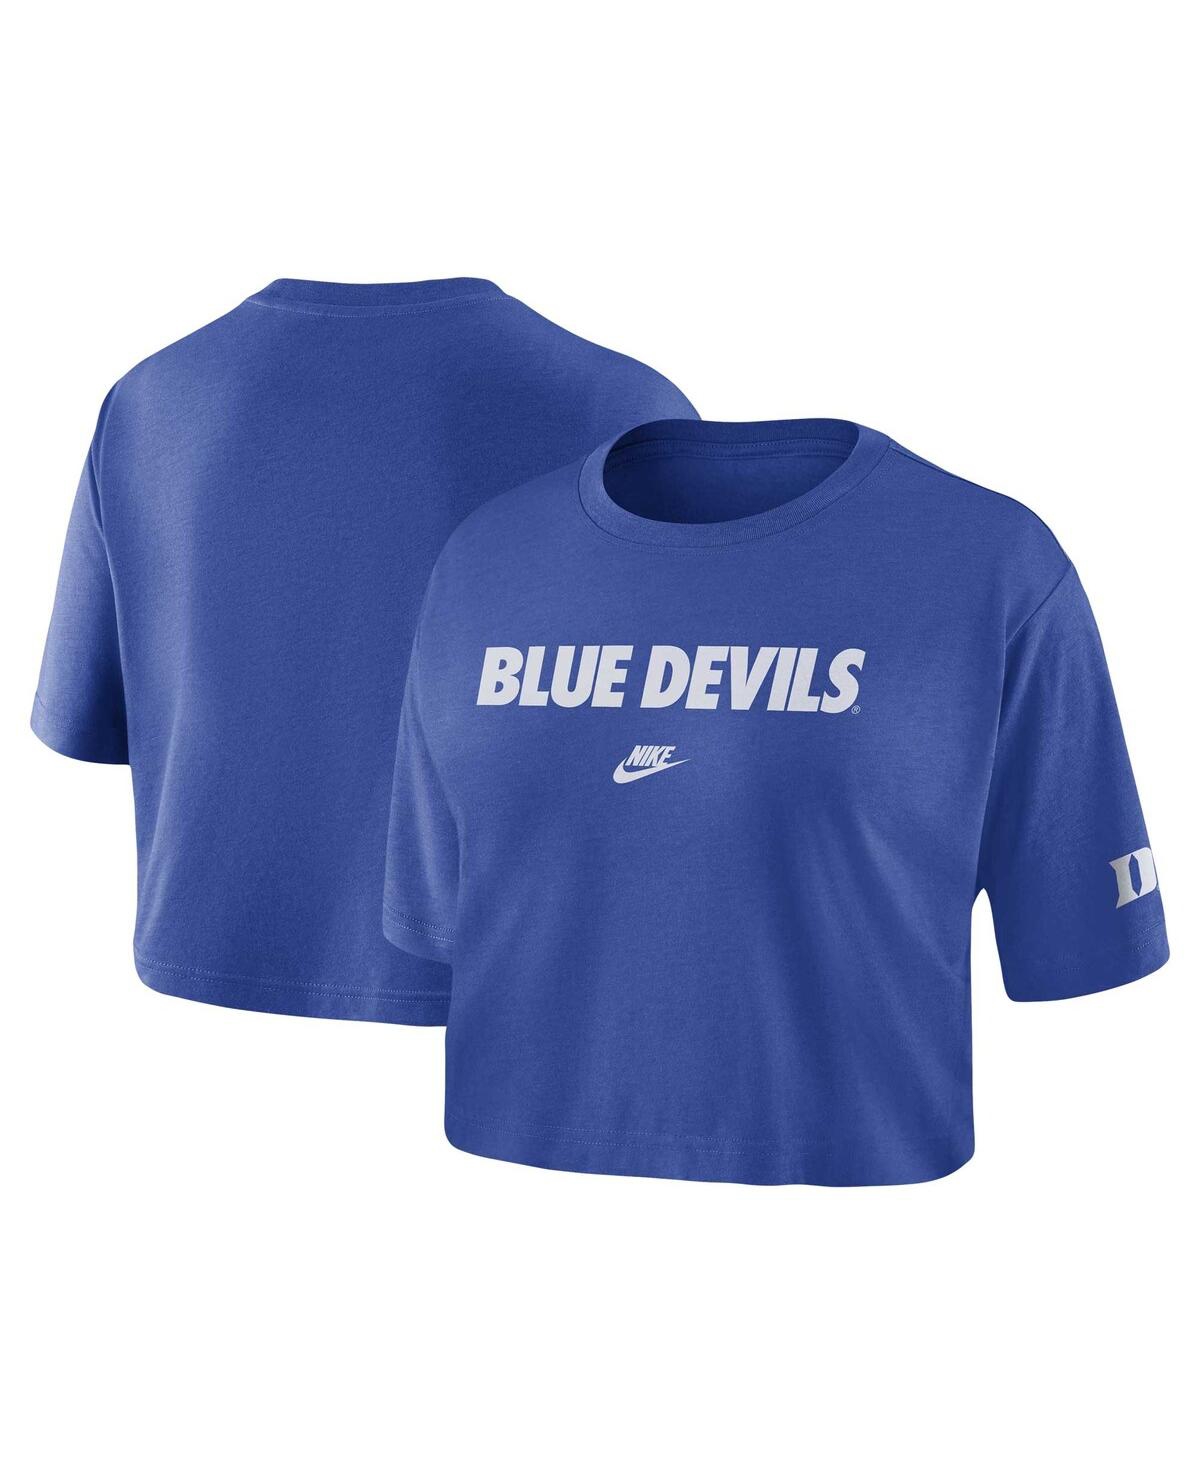 Women's Nike Royal Duke Blue Devils Wordmark Cropped T-shirt - Royal